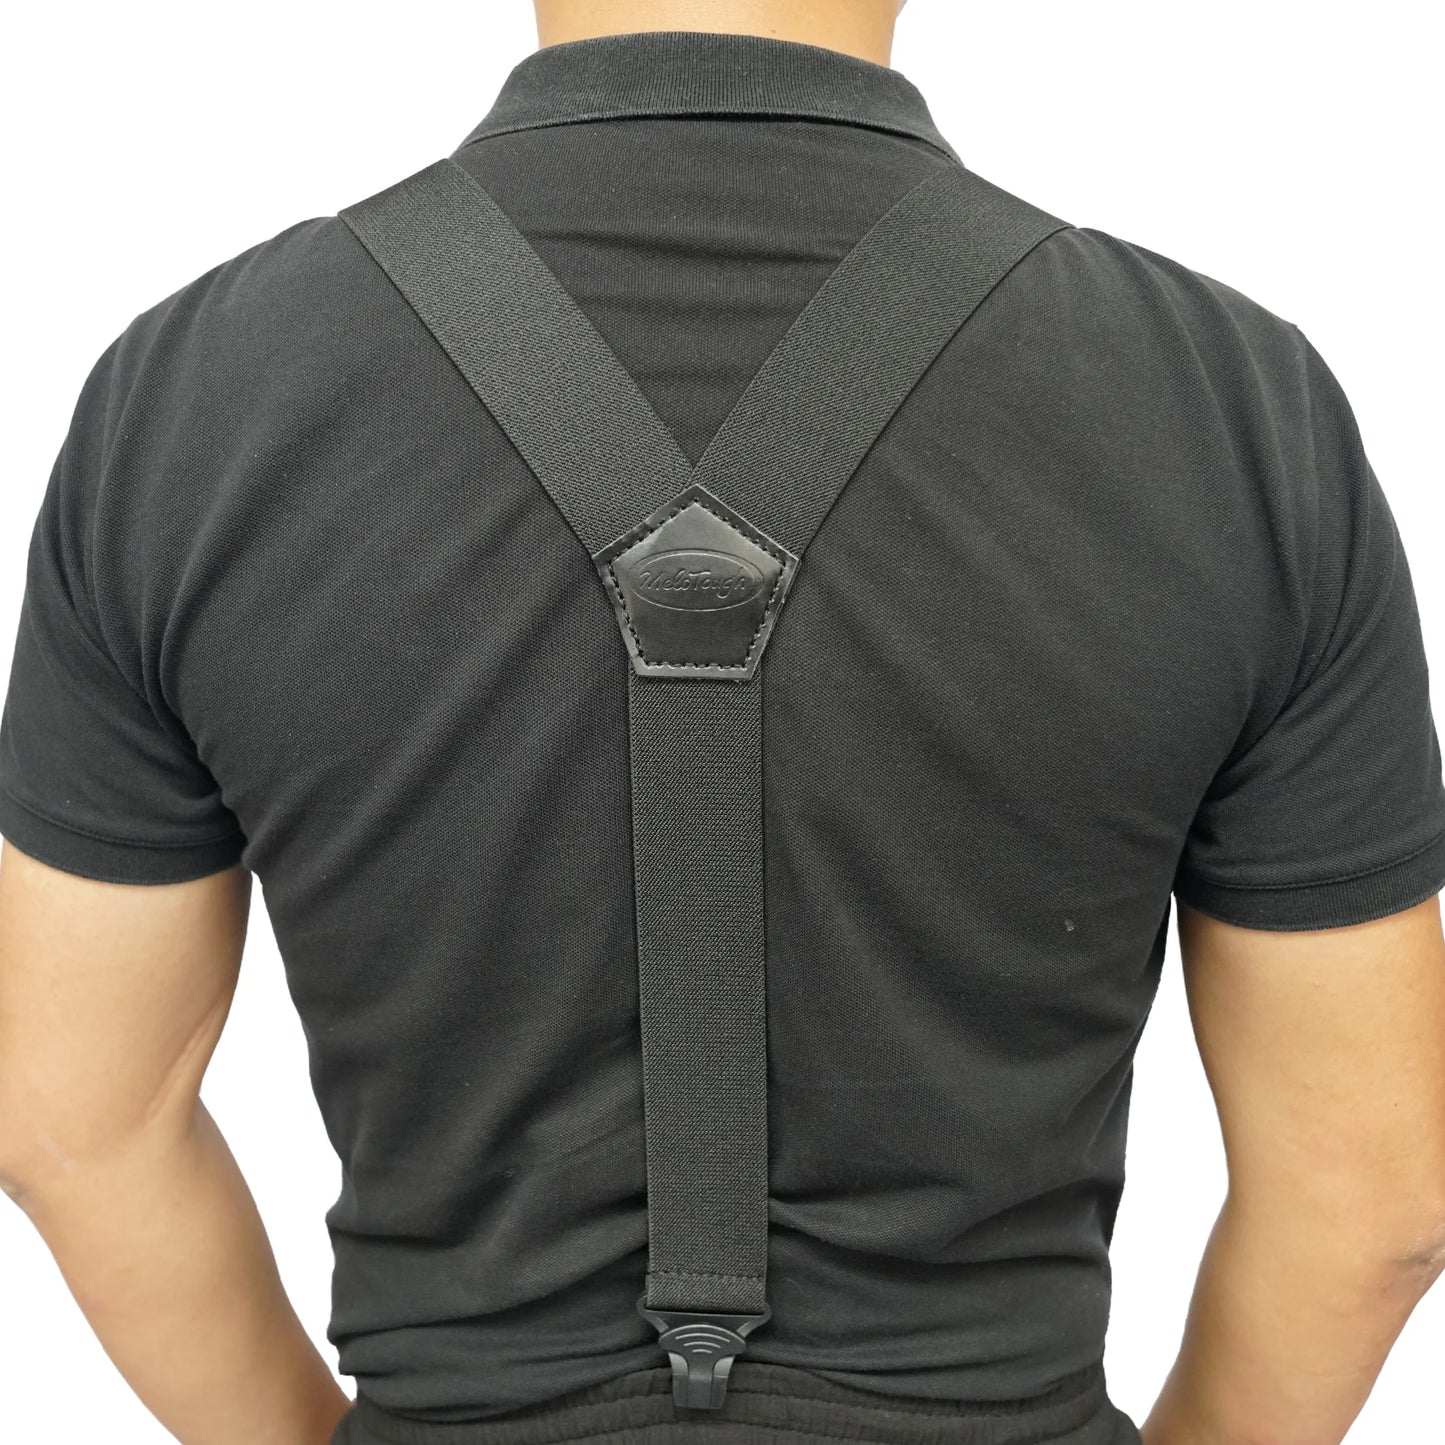 Melo Tough Y back elastic braces suspenders